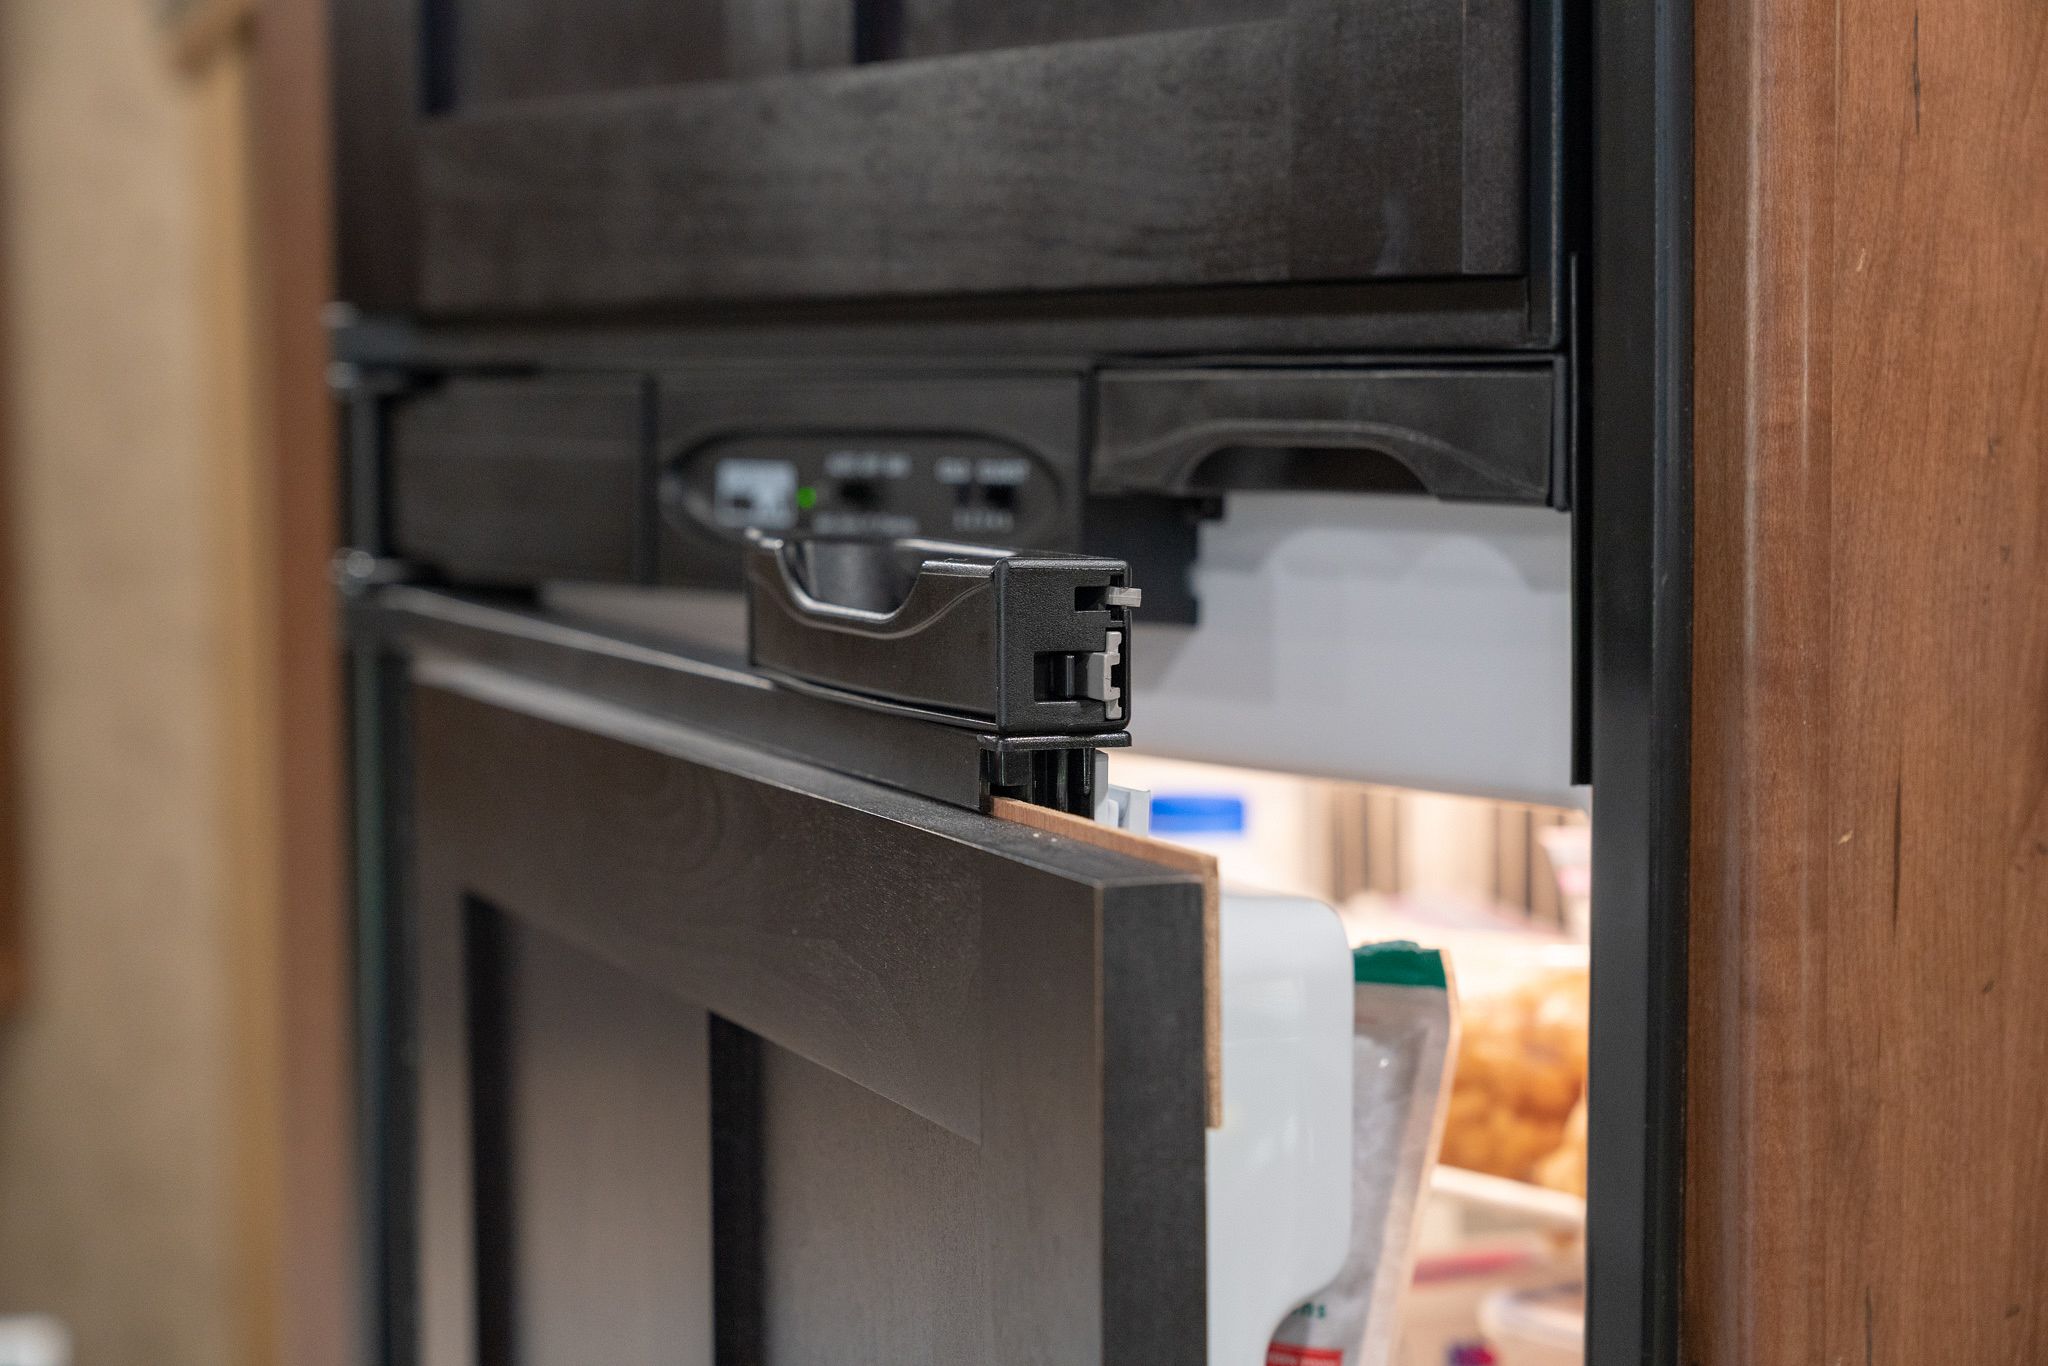 https://www.adventurousway.com/images/i/8t7bx7w05779/2048w/mods/installing-magnetic-dry-erase-rv-fridge-freezer-doors/sliding-out-fridge-door.jpeg